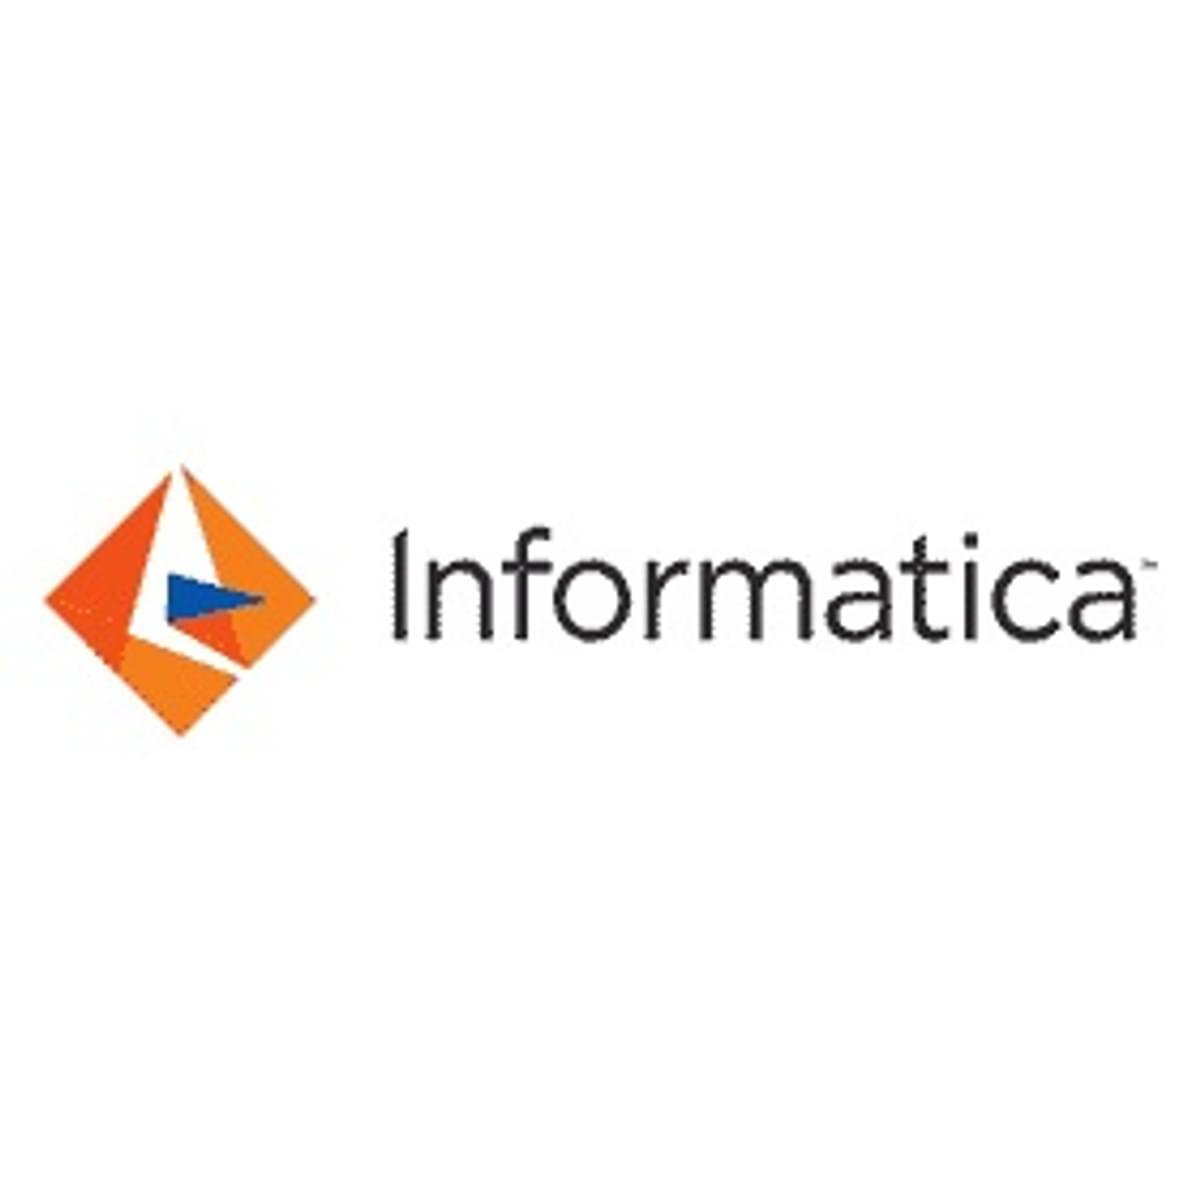 Informatica introduceert Intelligent Data Management Cloud image